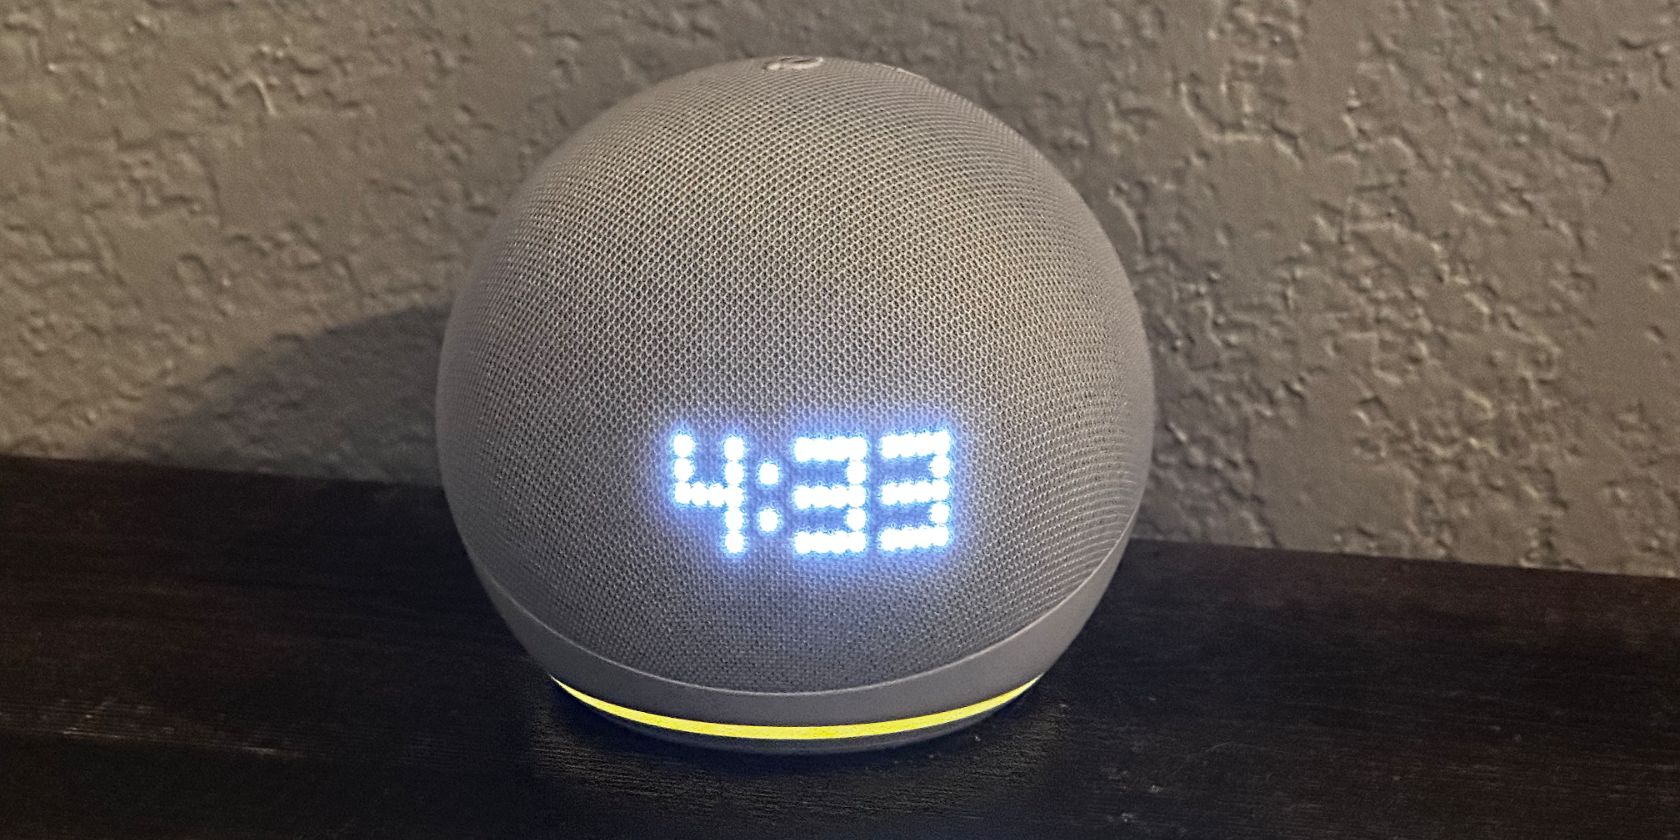 Echo Dot Smart Speaker with Clock - 5th Generation